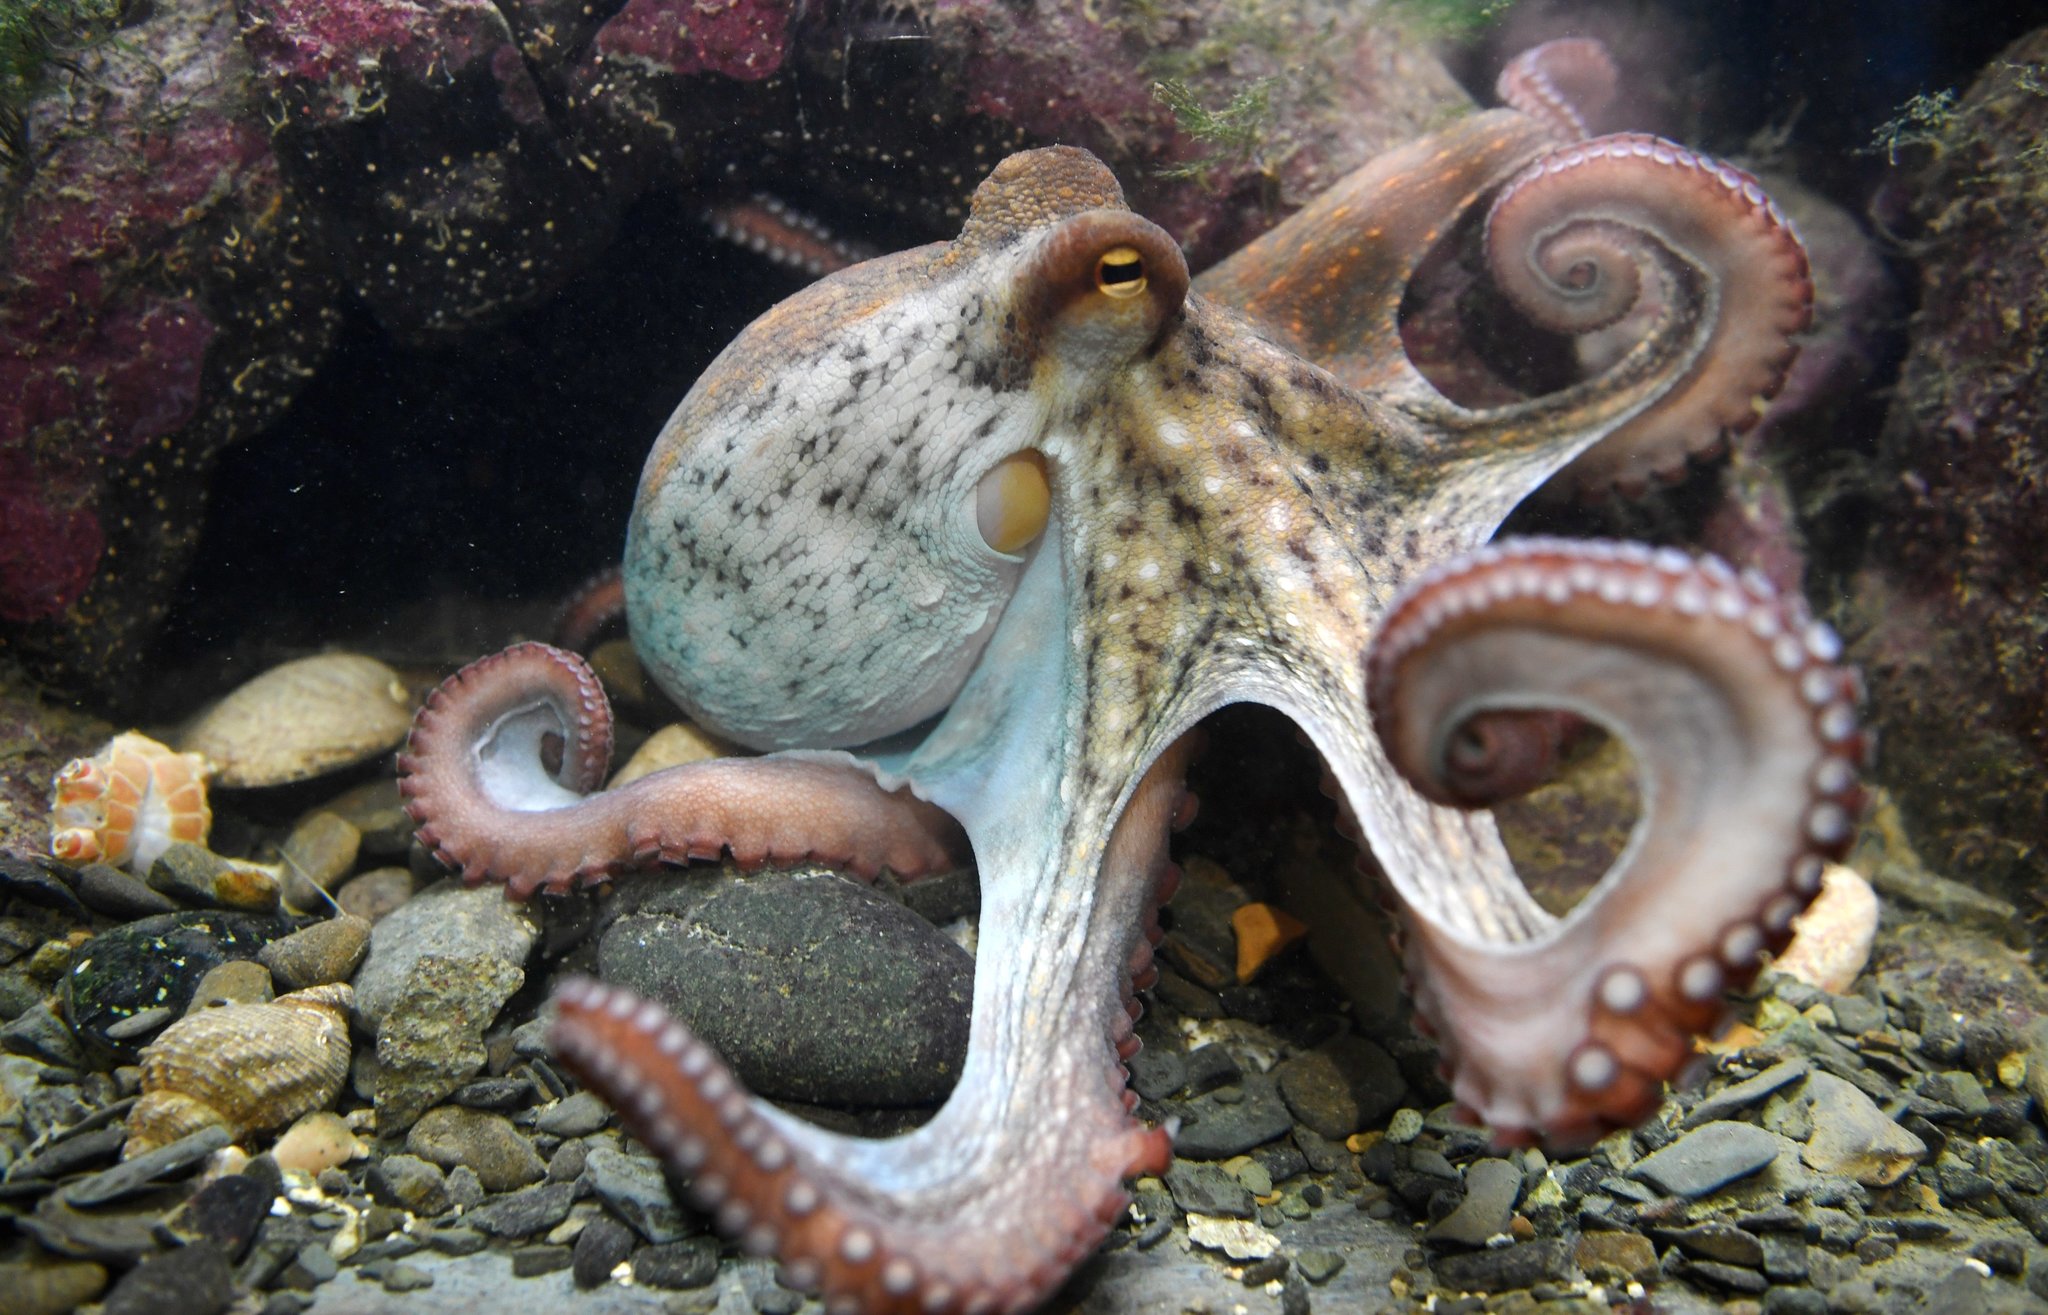 How smart is an octopus?